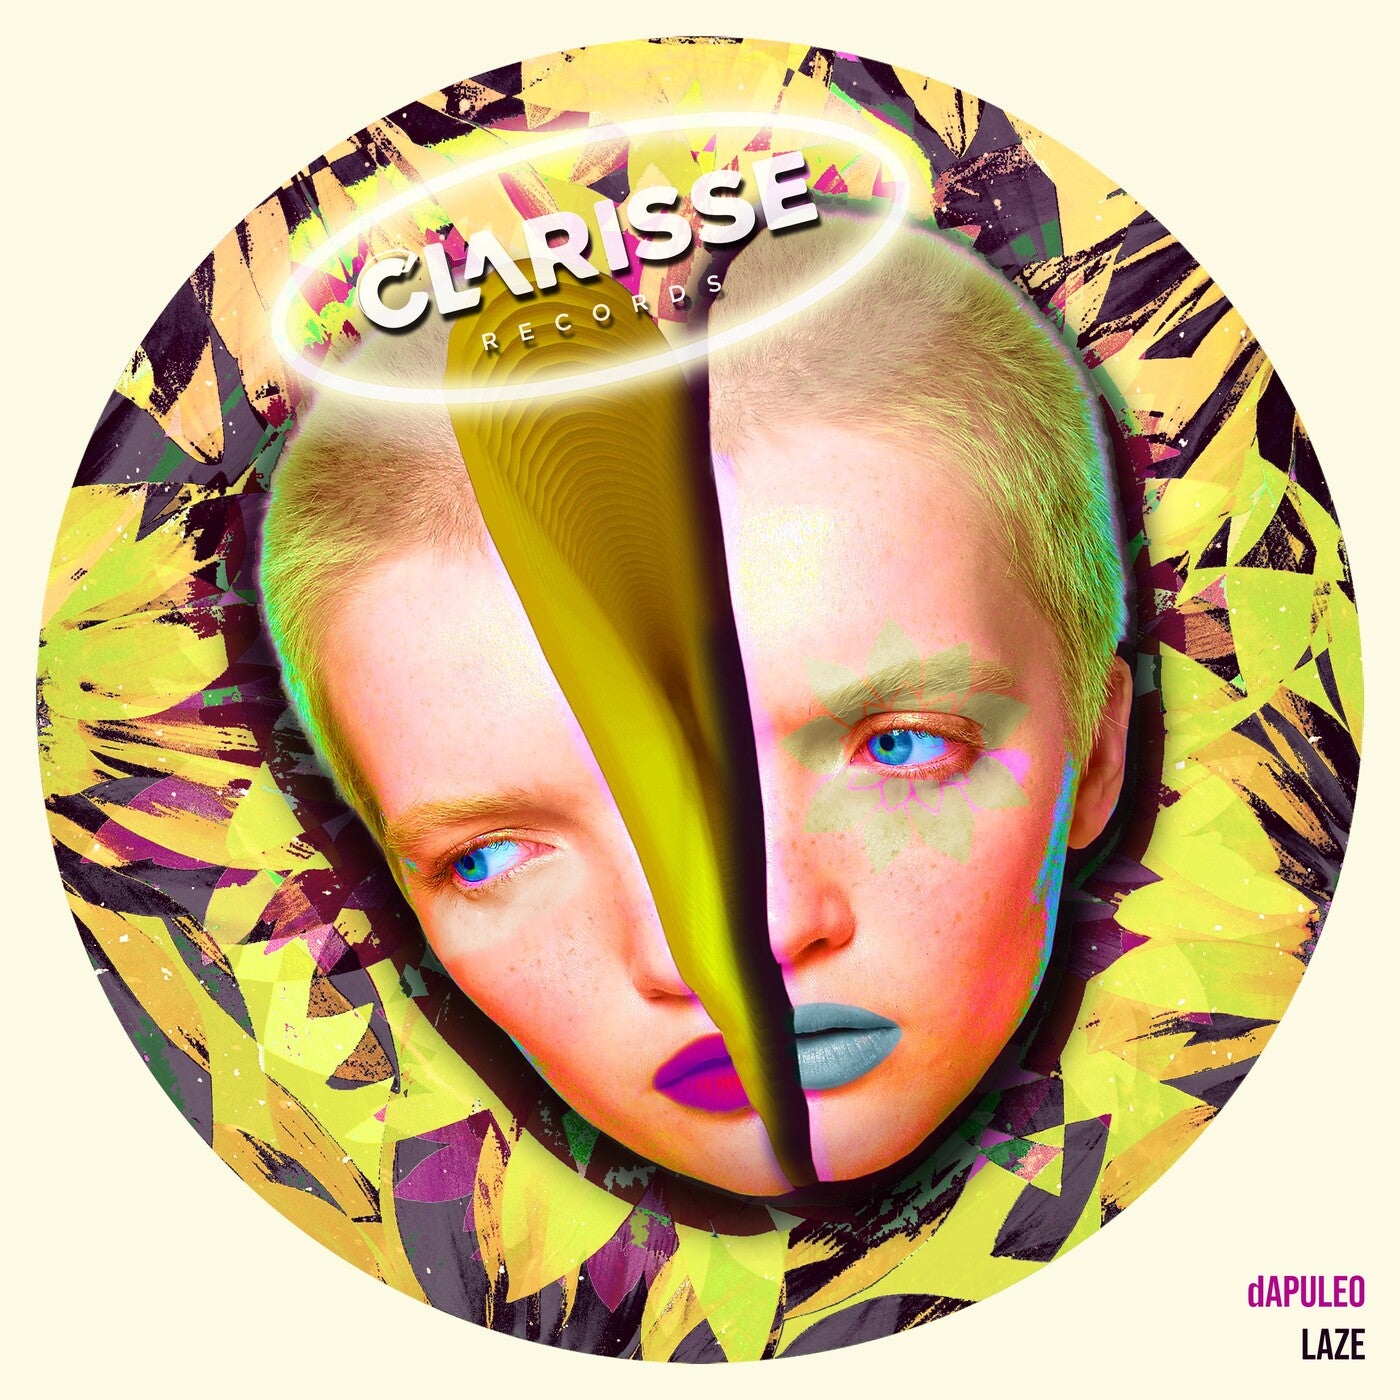 image cover: dAPULEO - Laze on Clarisse Records